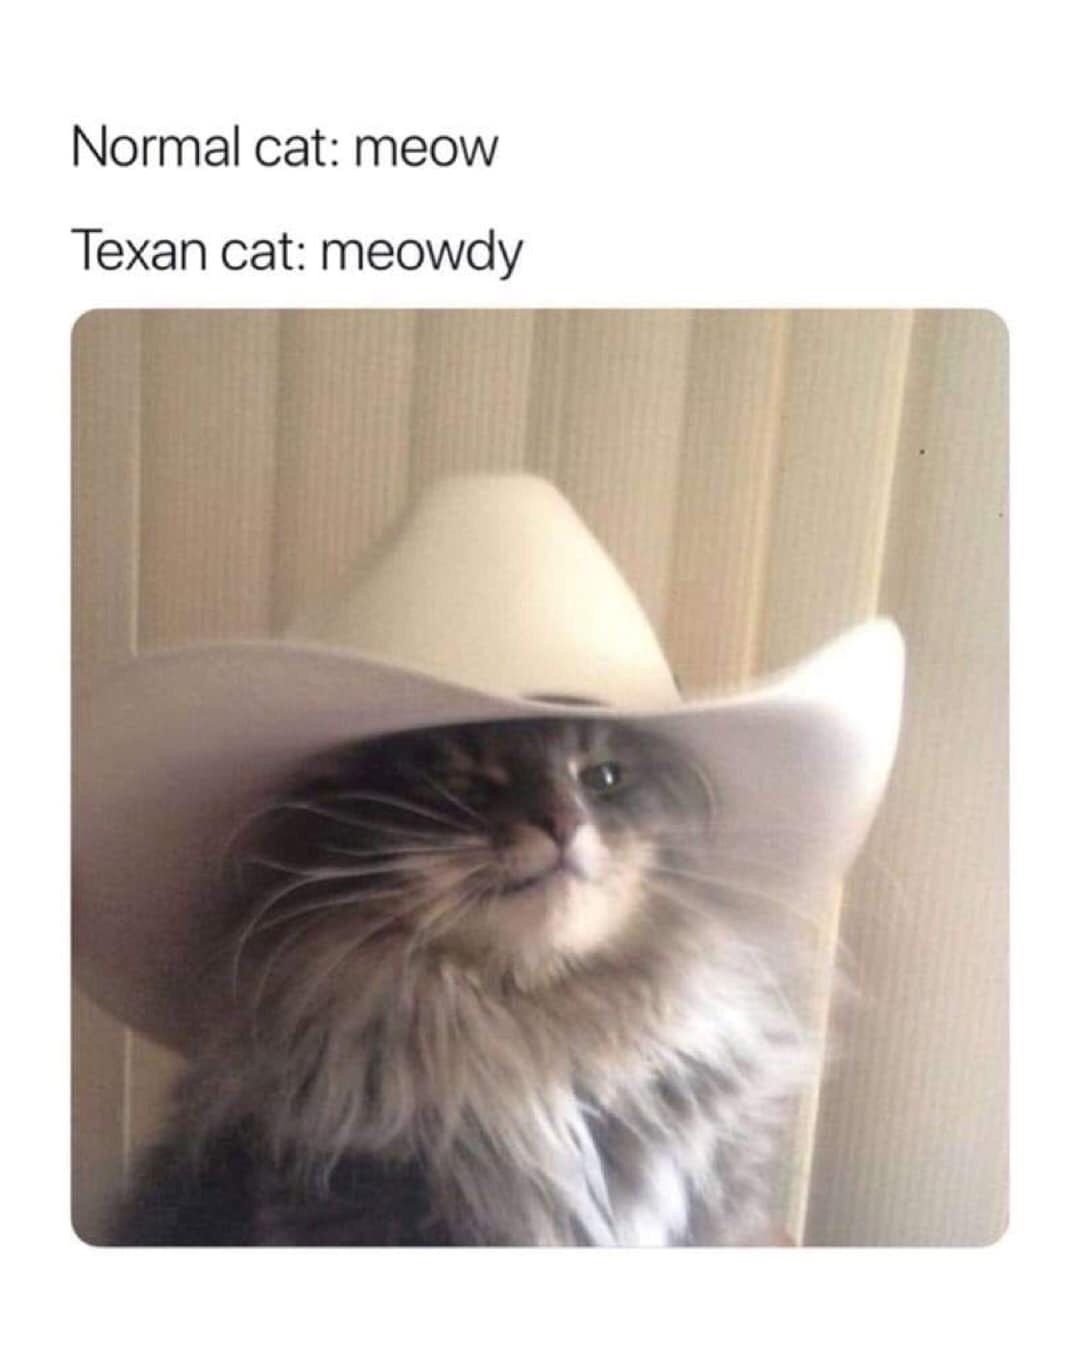 texan cat - Normal cat meow Texan cat meowdy